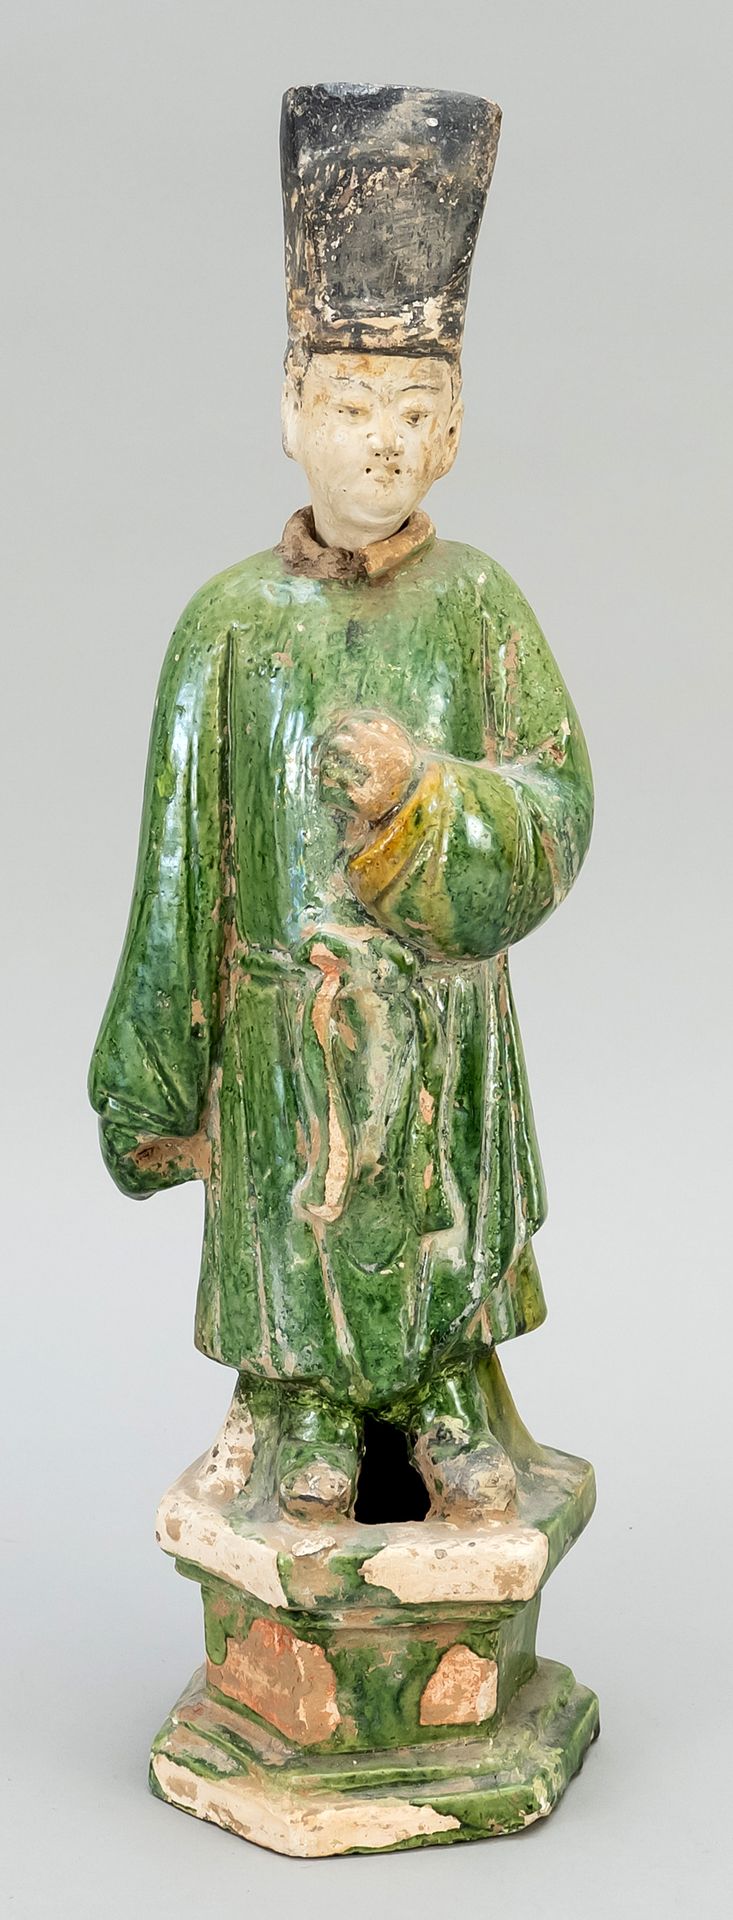 Null Figura in argilla, Cina, età sconosciuta (periodo Tang?). Figura posta su u&hellip;